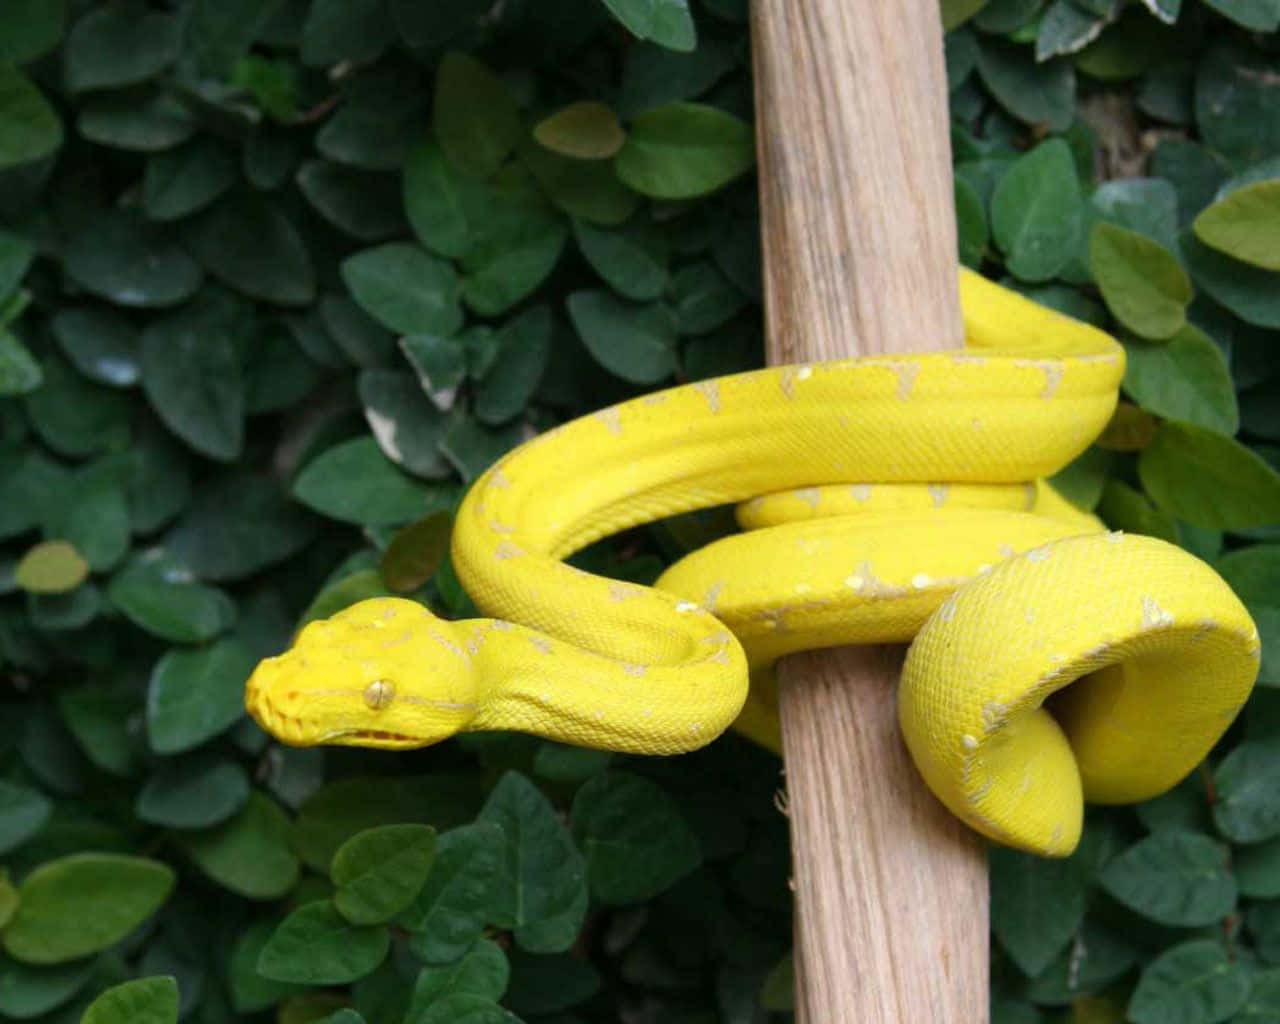 Captivating Yellow Snake Wallpaper